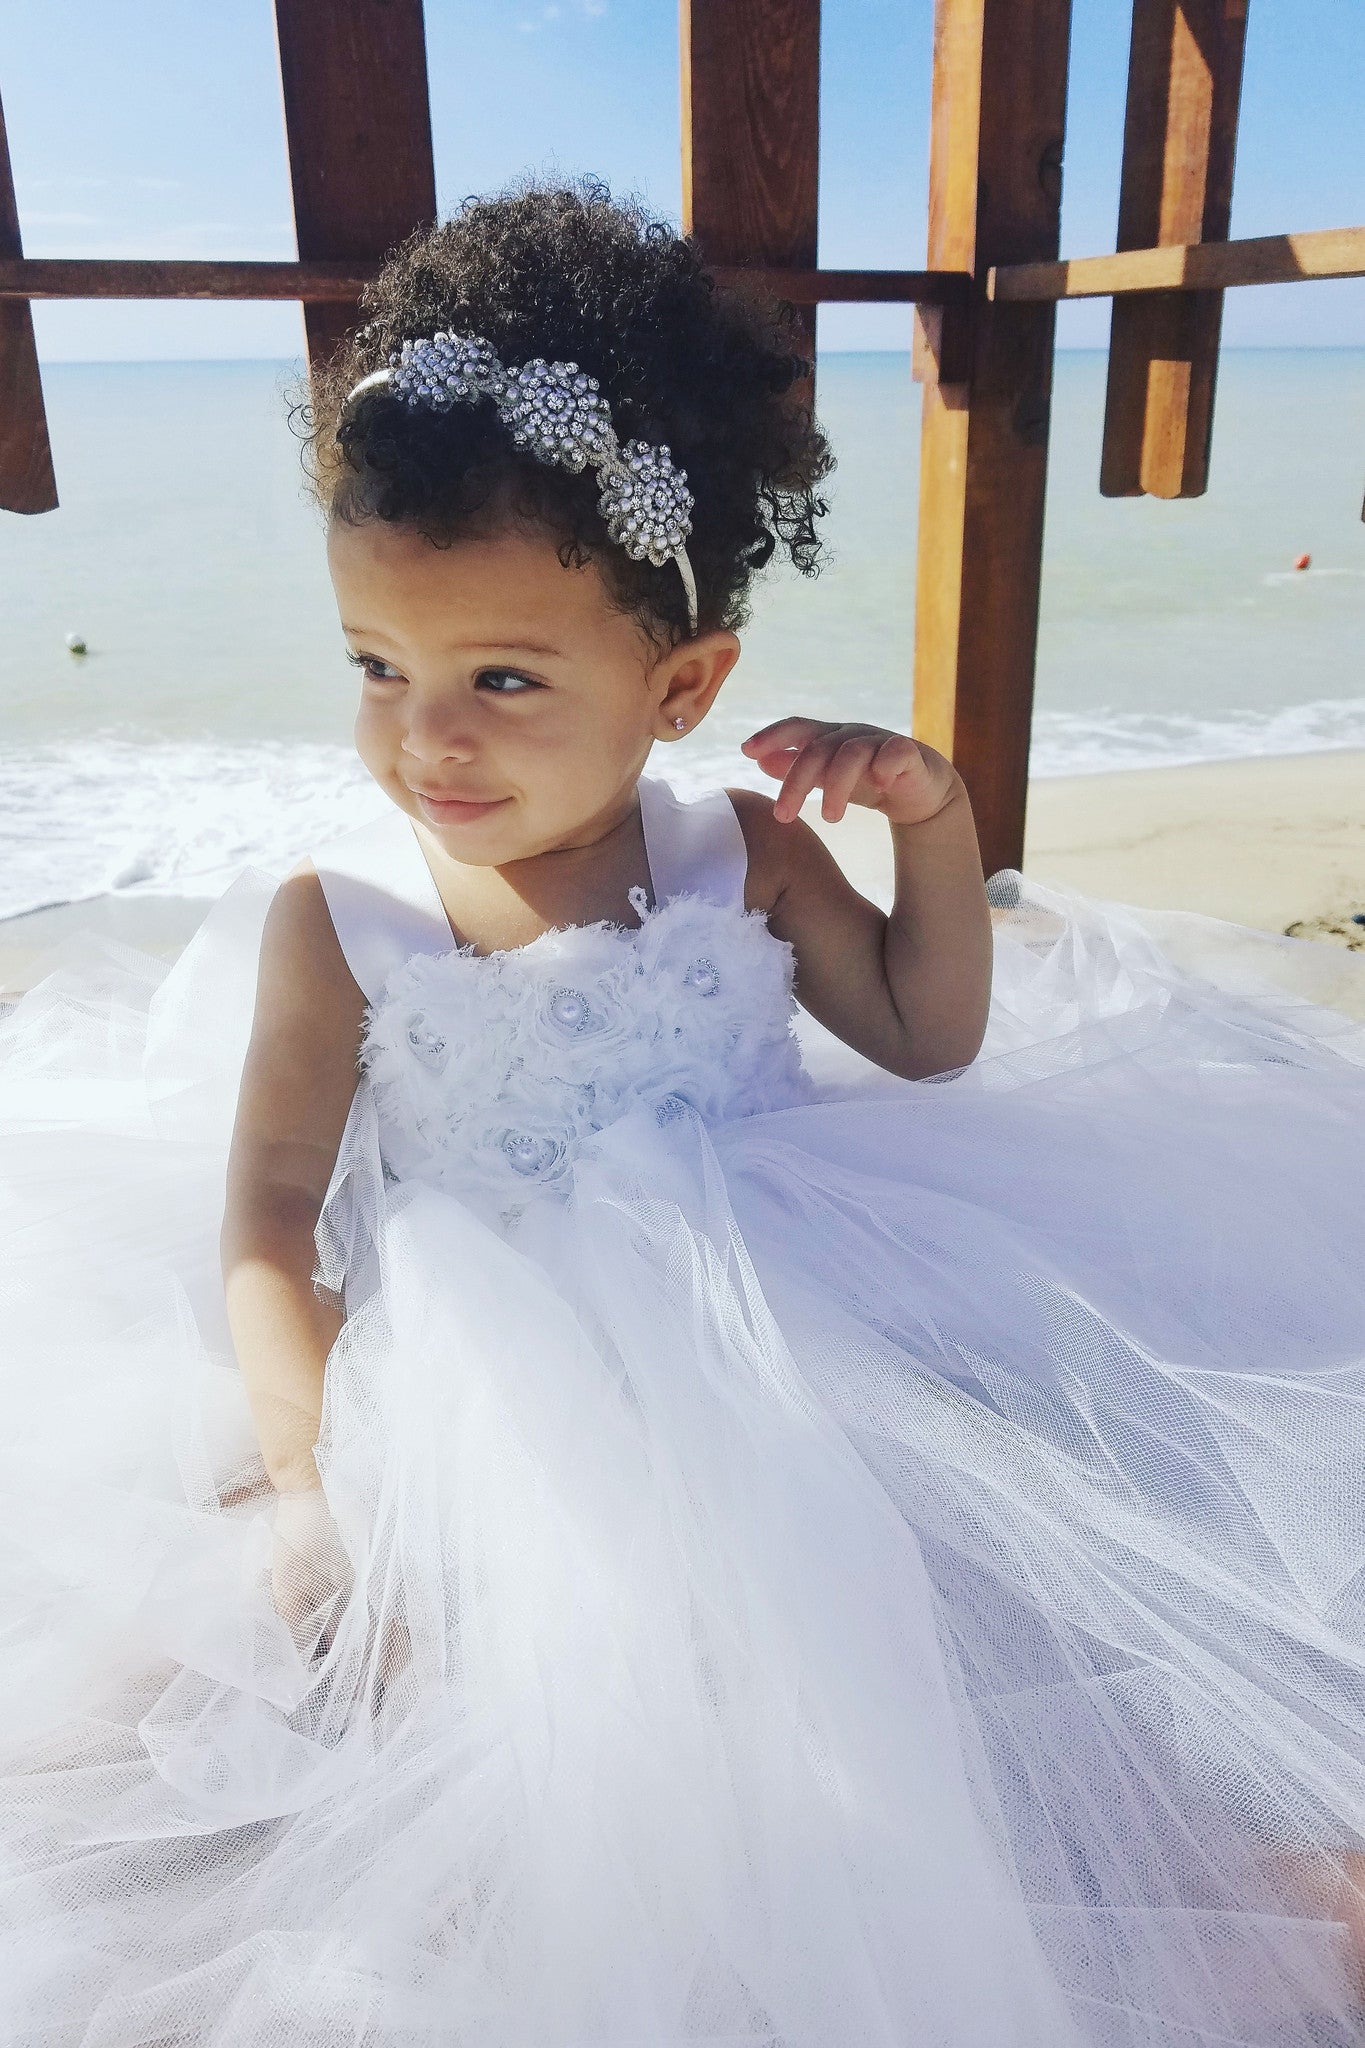 Ivory Flower Girl Tutu Dress-with matching headpiece-Satin Straps-Wedding Dress Pageant Dress Toddler Dress Tulle Dress